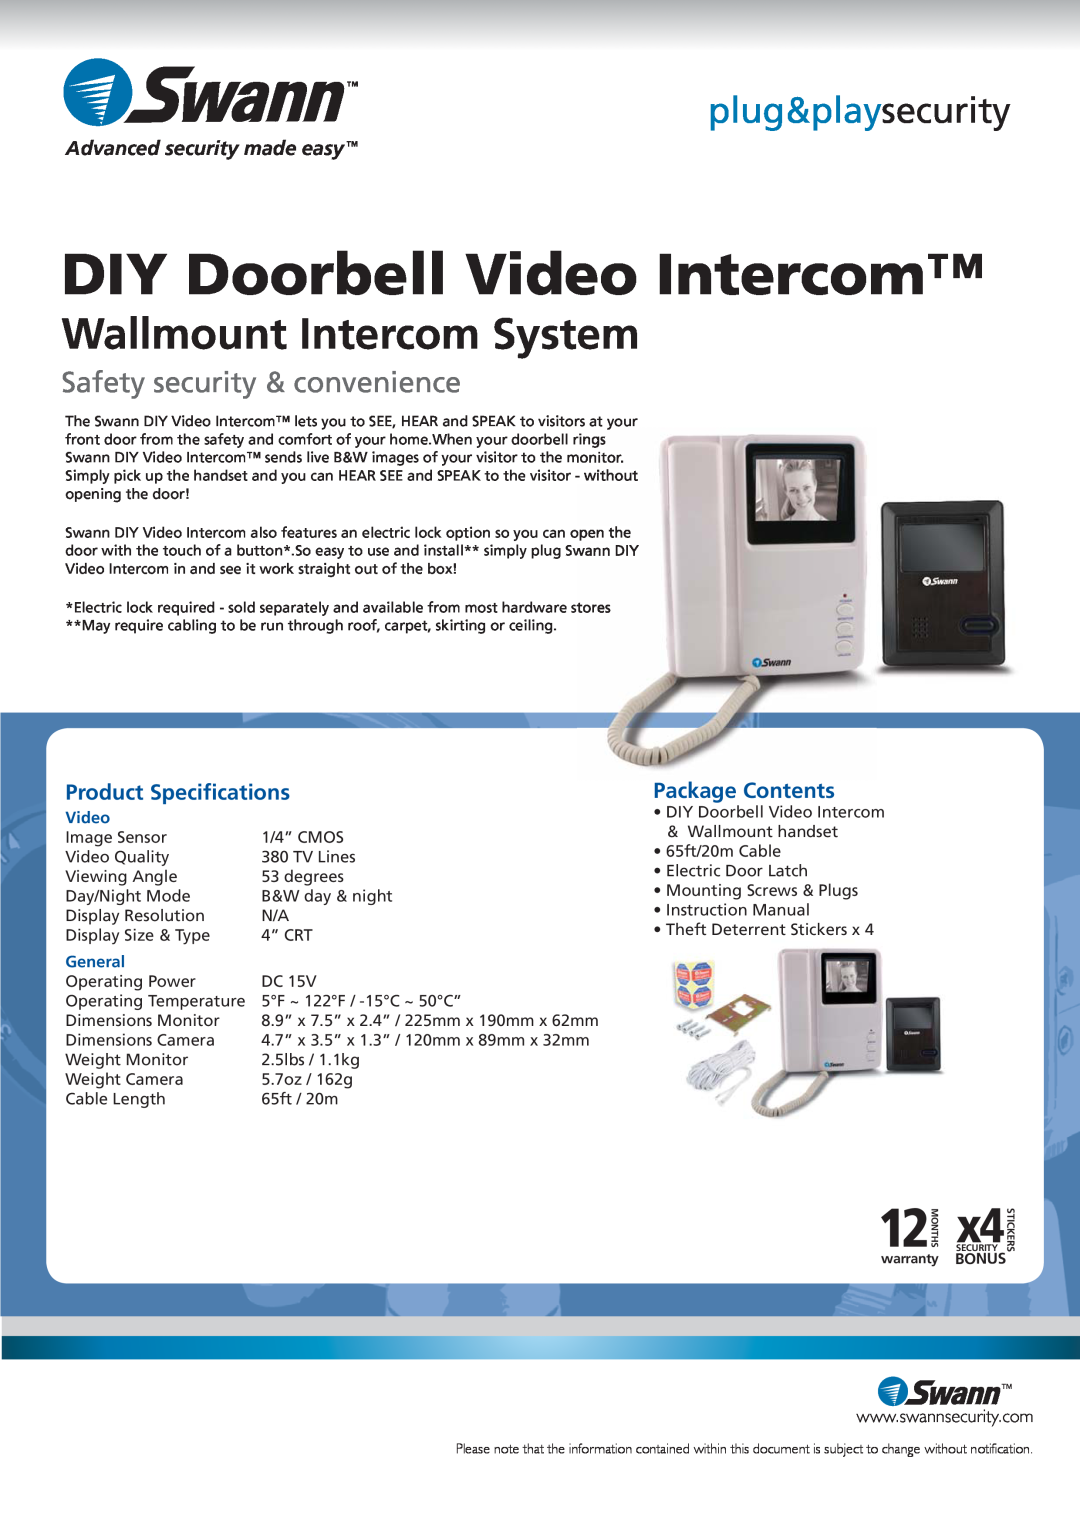 Swann SW244-DWM DIY Doorbell Video Intercom, Wallmount Intercom System, plug&playsecurity, Safety security & convenience 